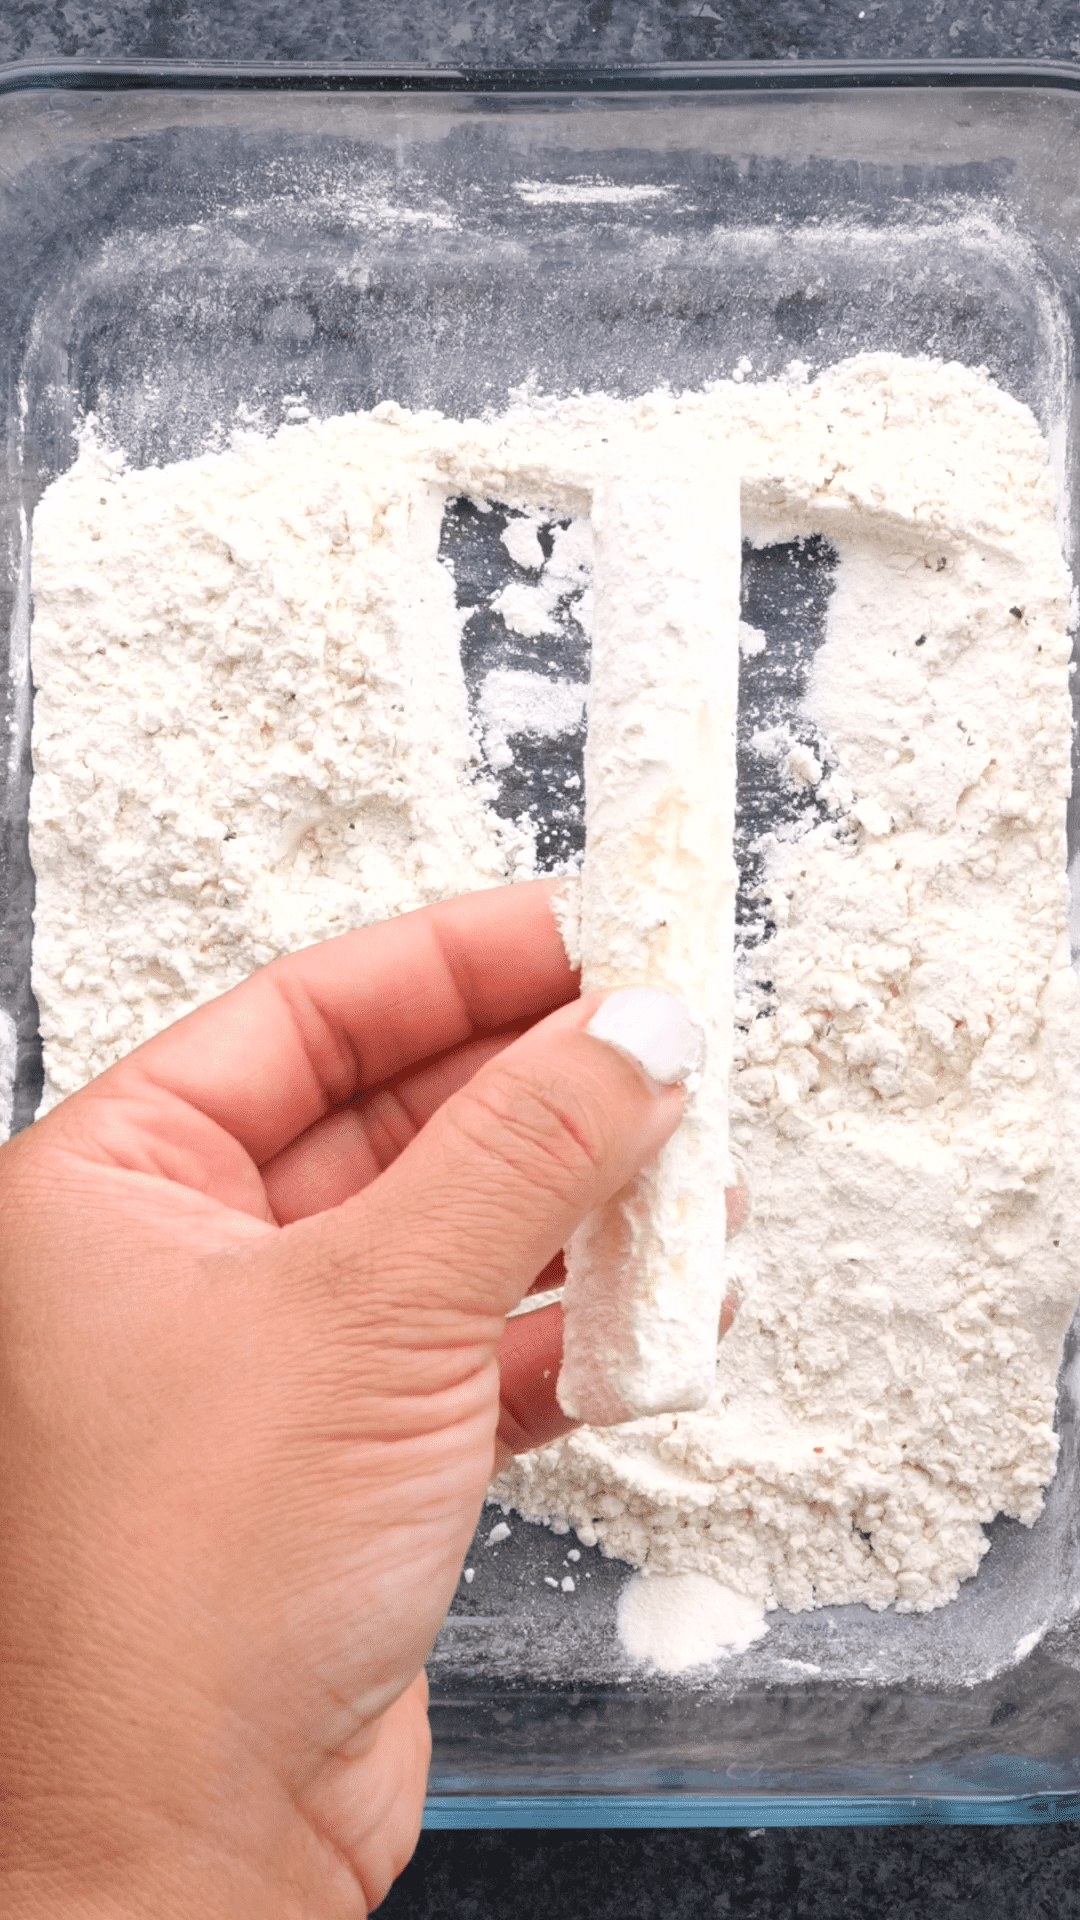 Mozzarella stick being dredged in an flour mixture